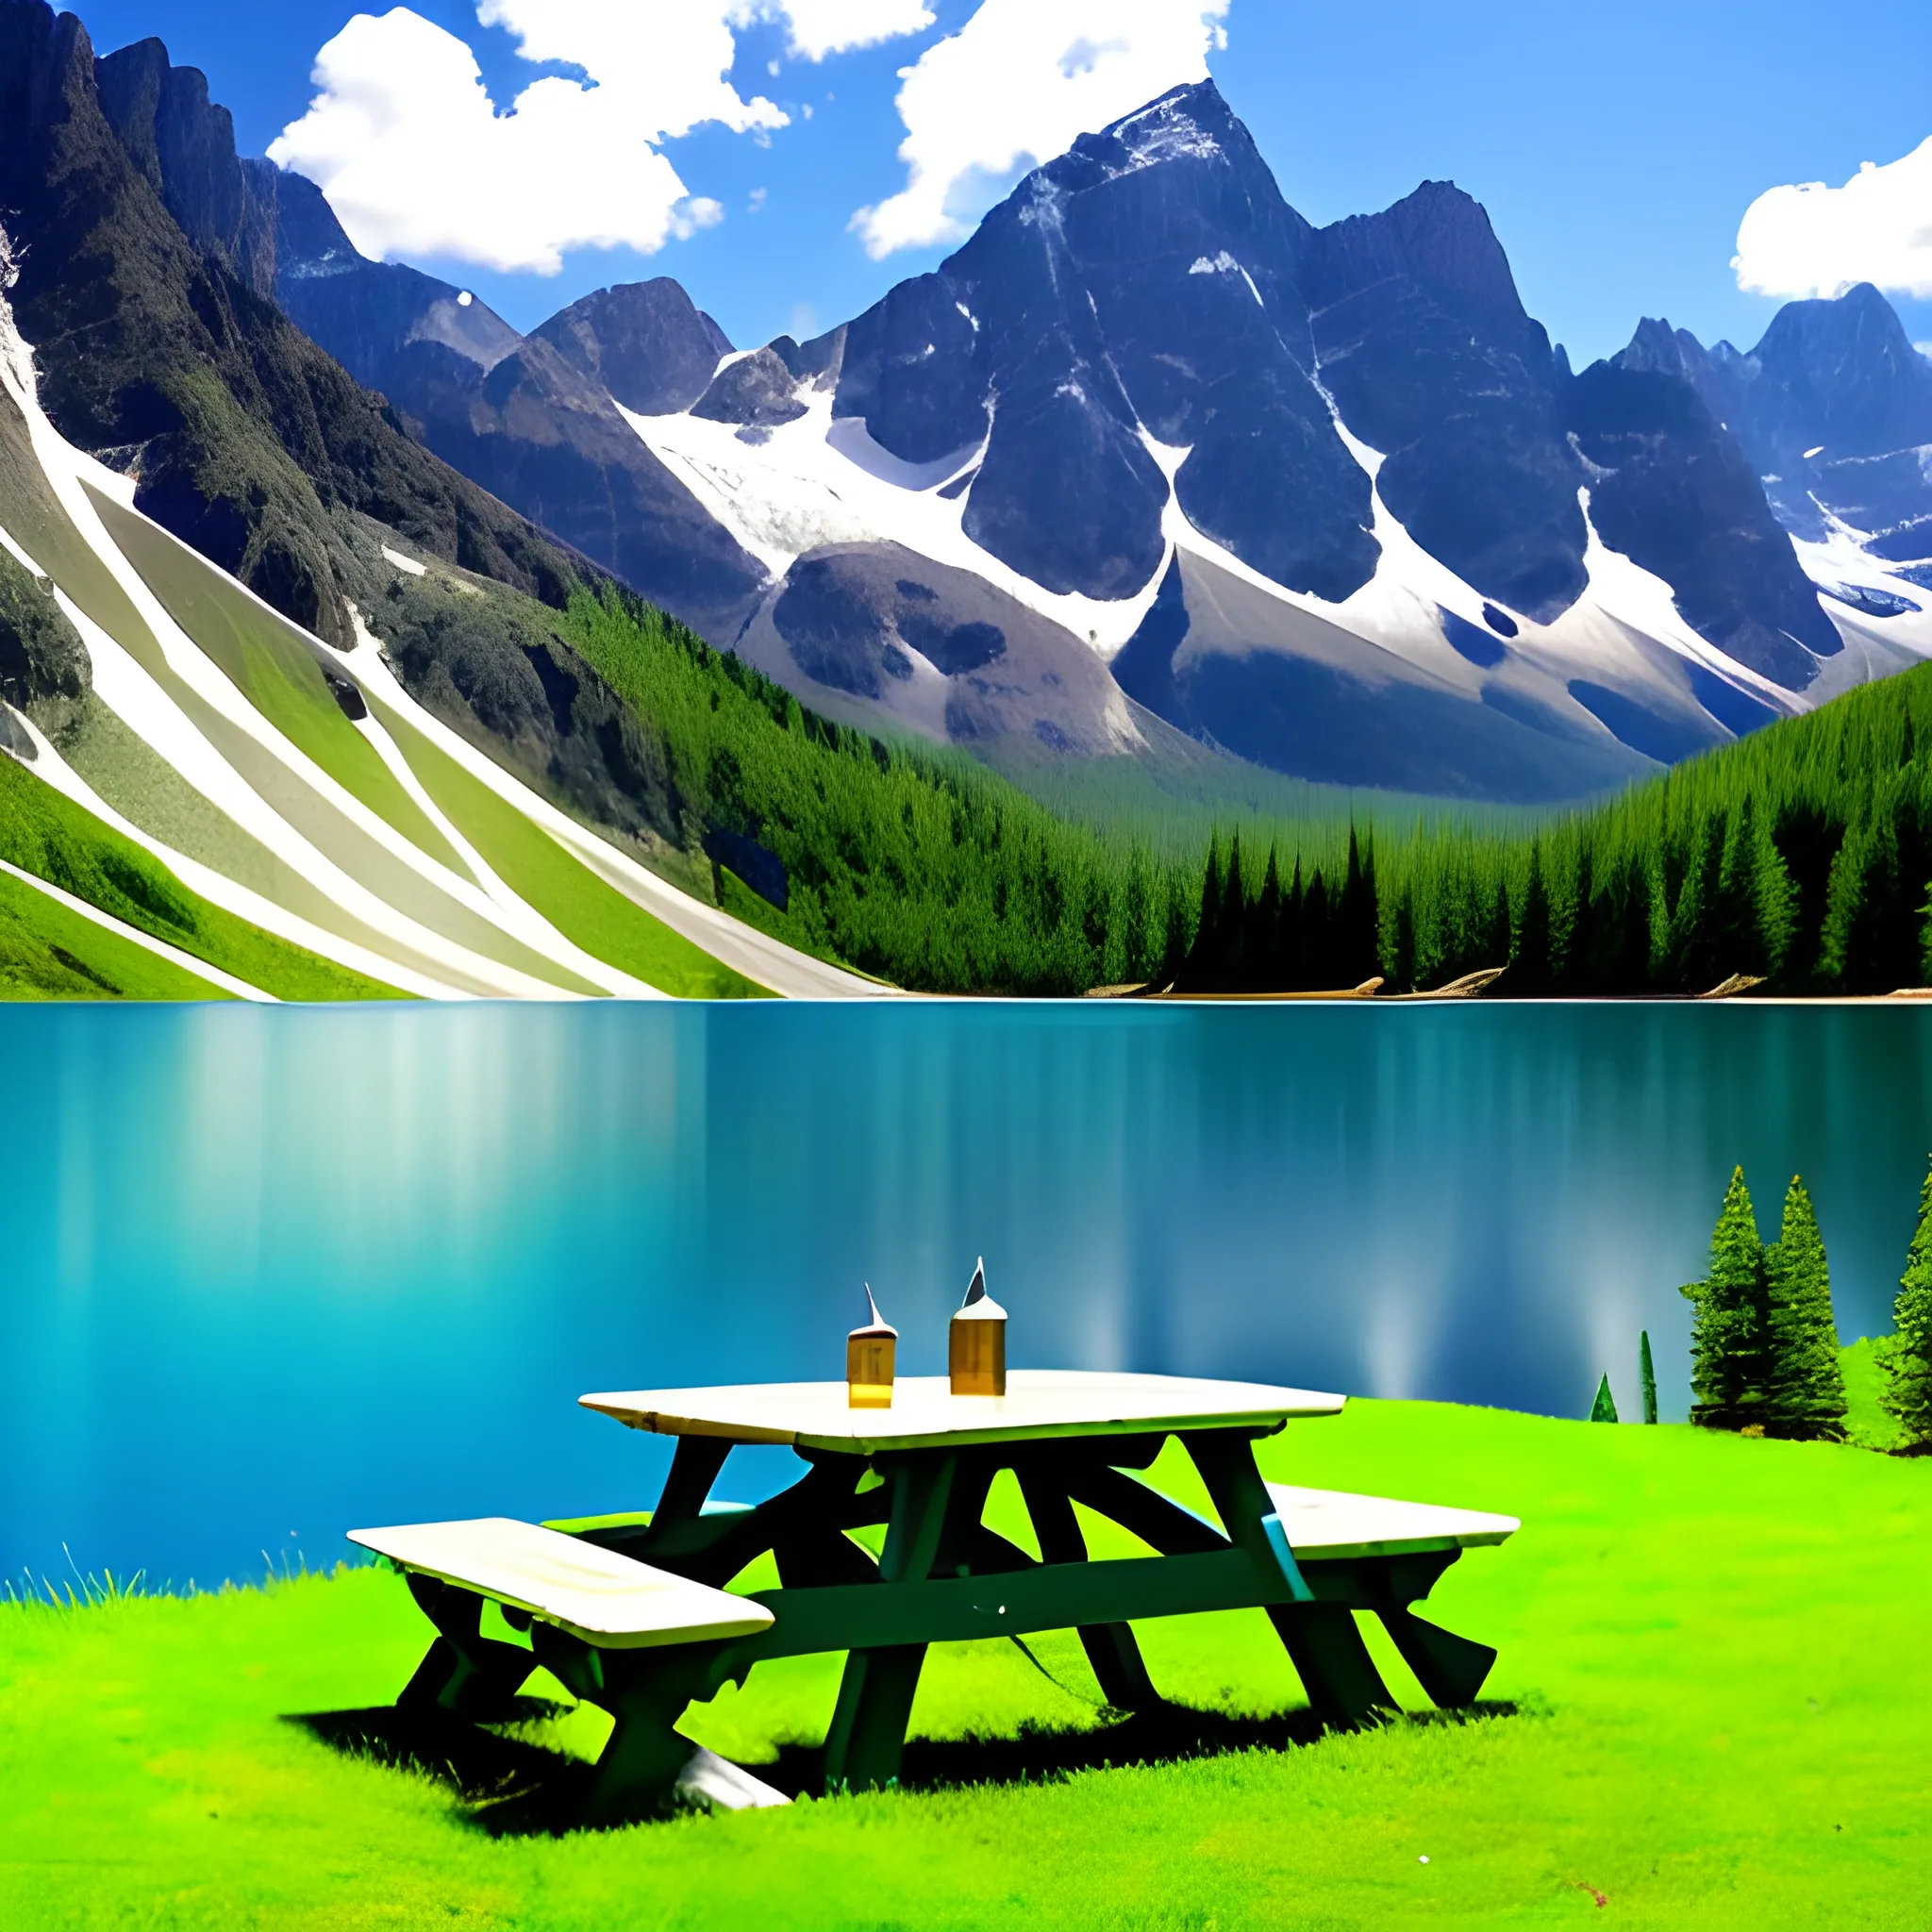 Mountains, blue lake, picnic table, green field 